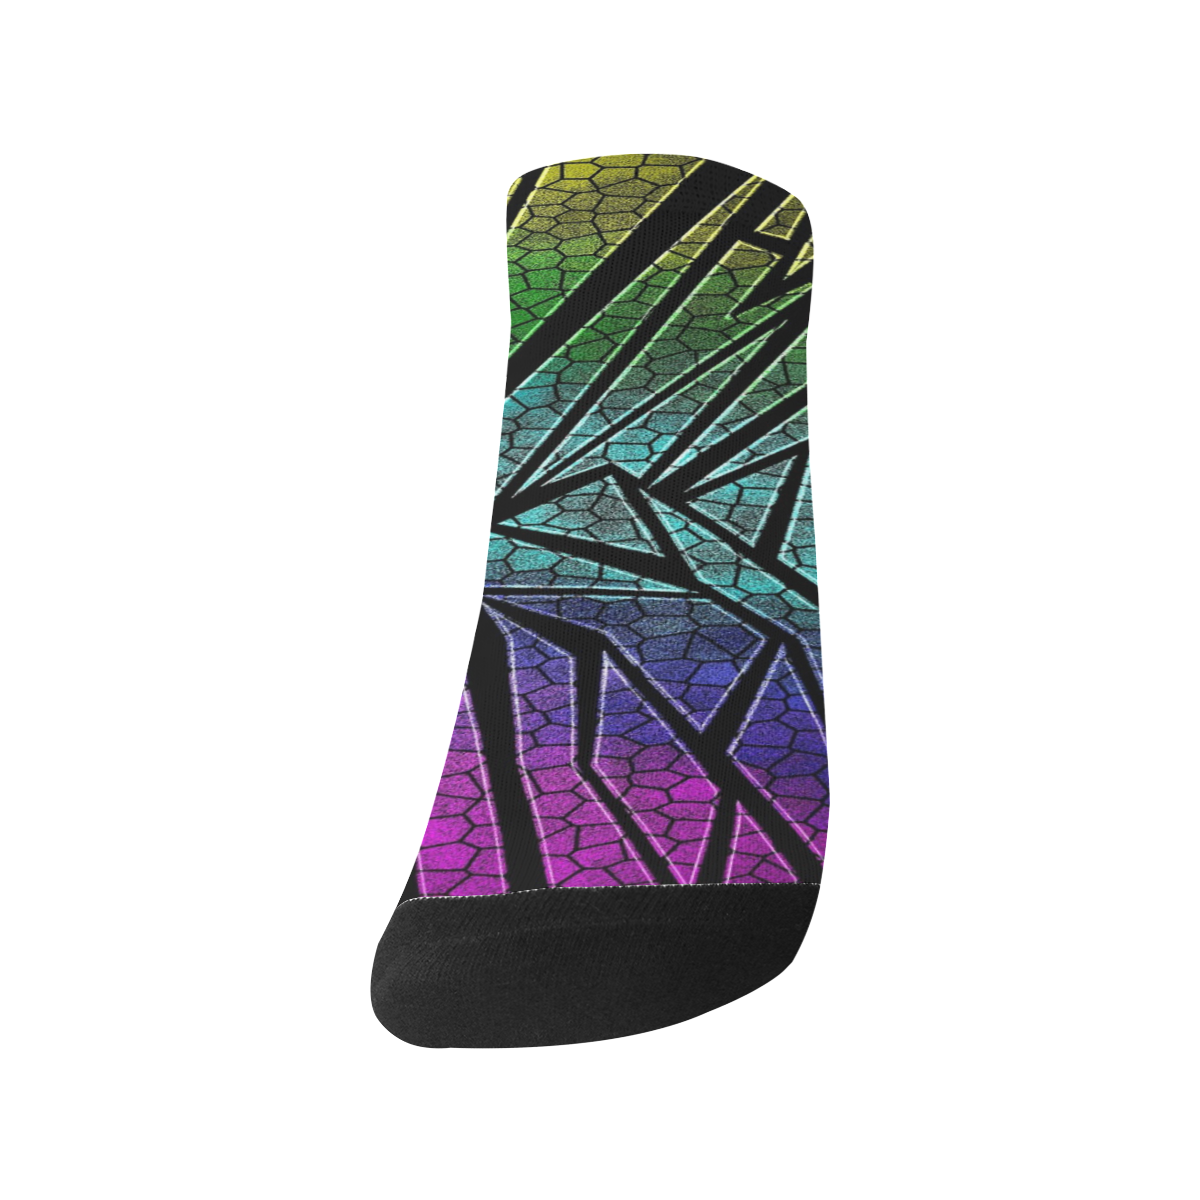 Neon Rainbow Cracked Mosaic Women's Ankle Socks